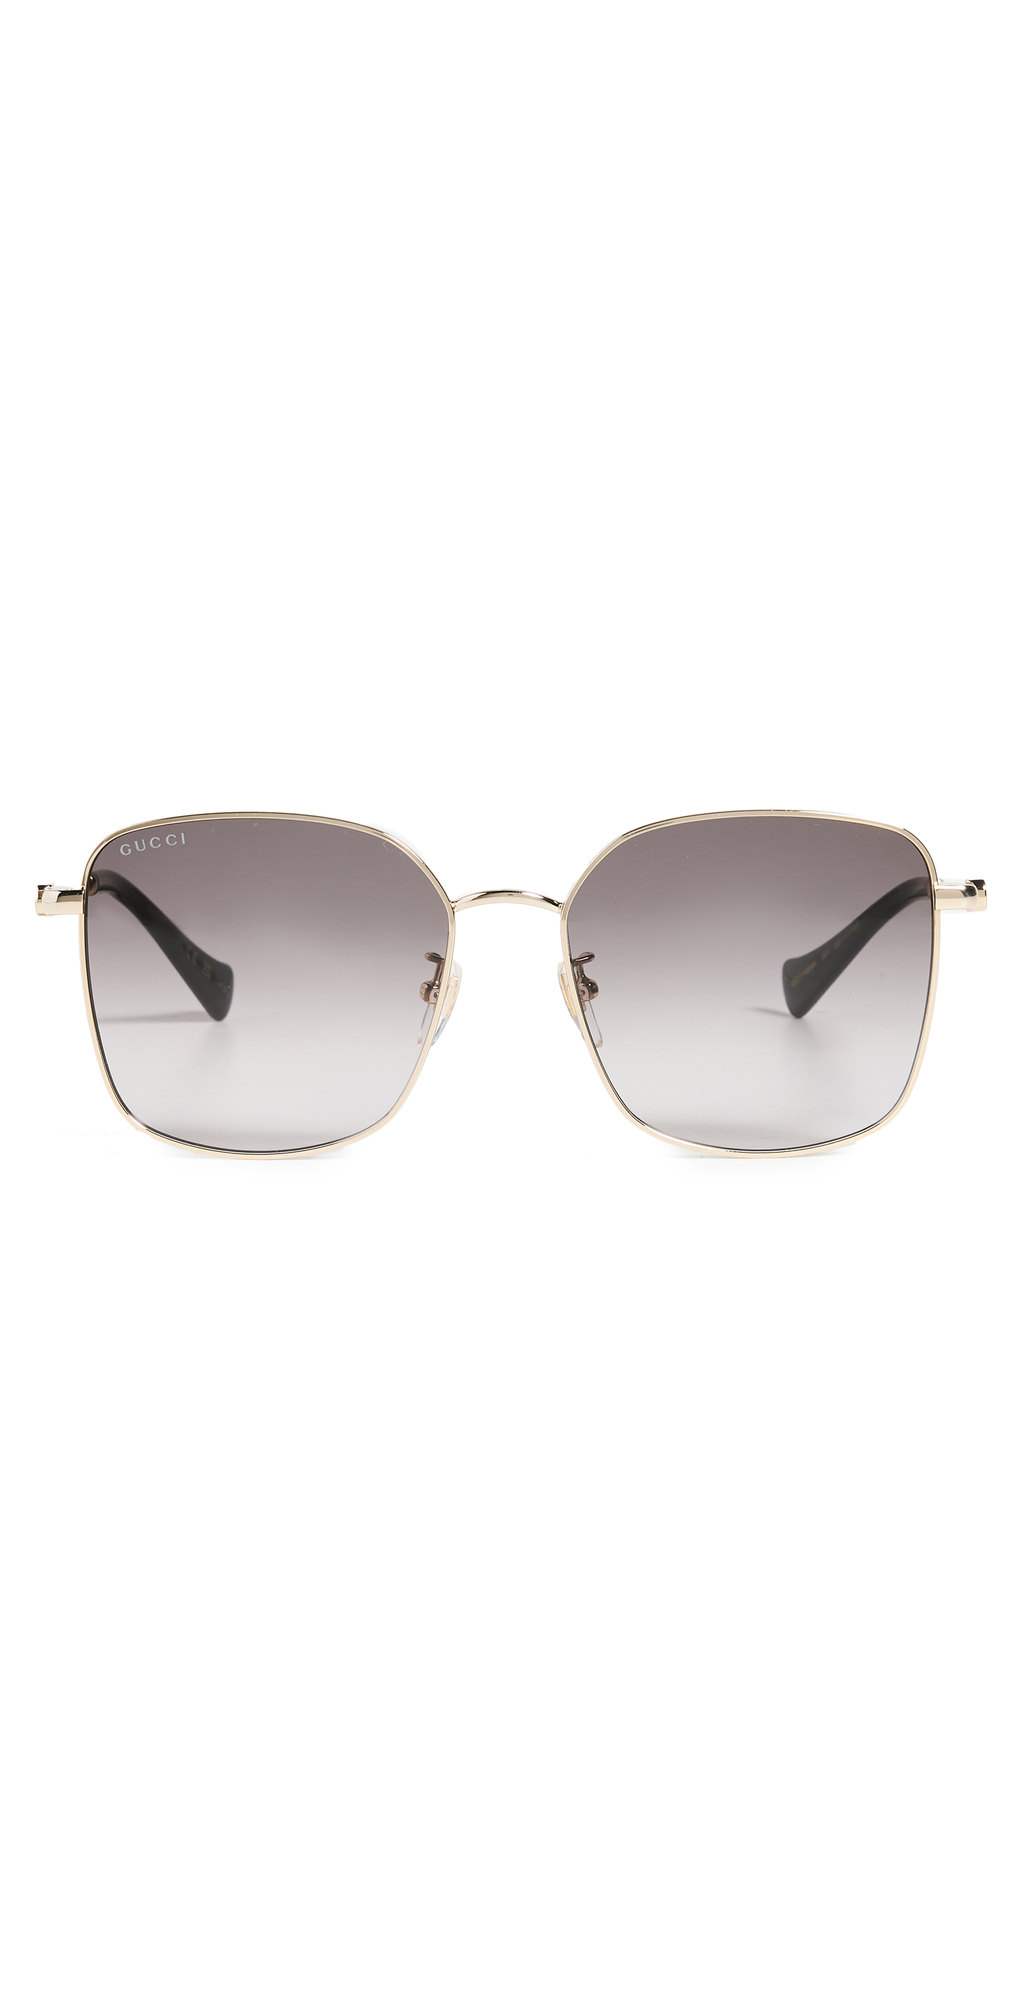 Gucci Mini Running Metal Squared Sunglasses in gold / grey